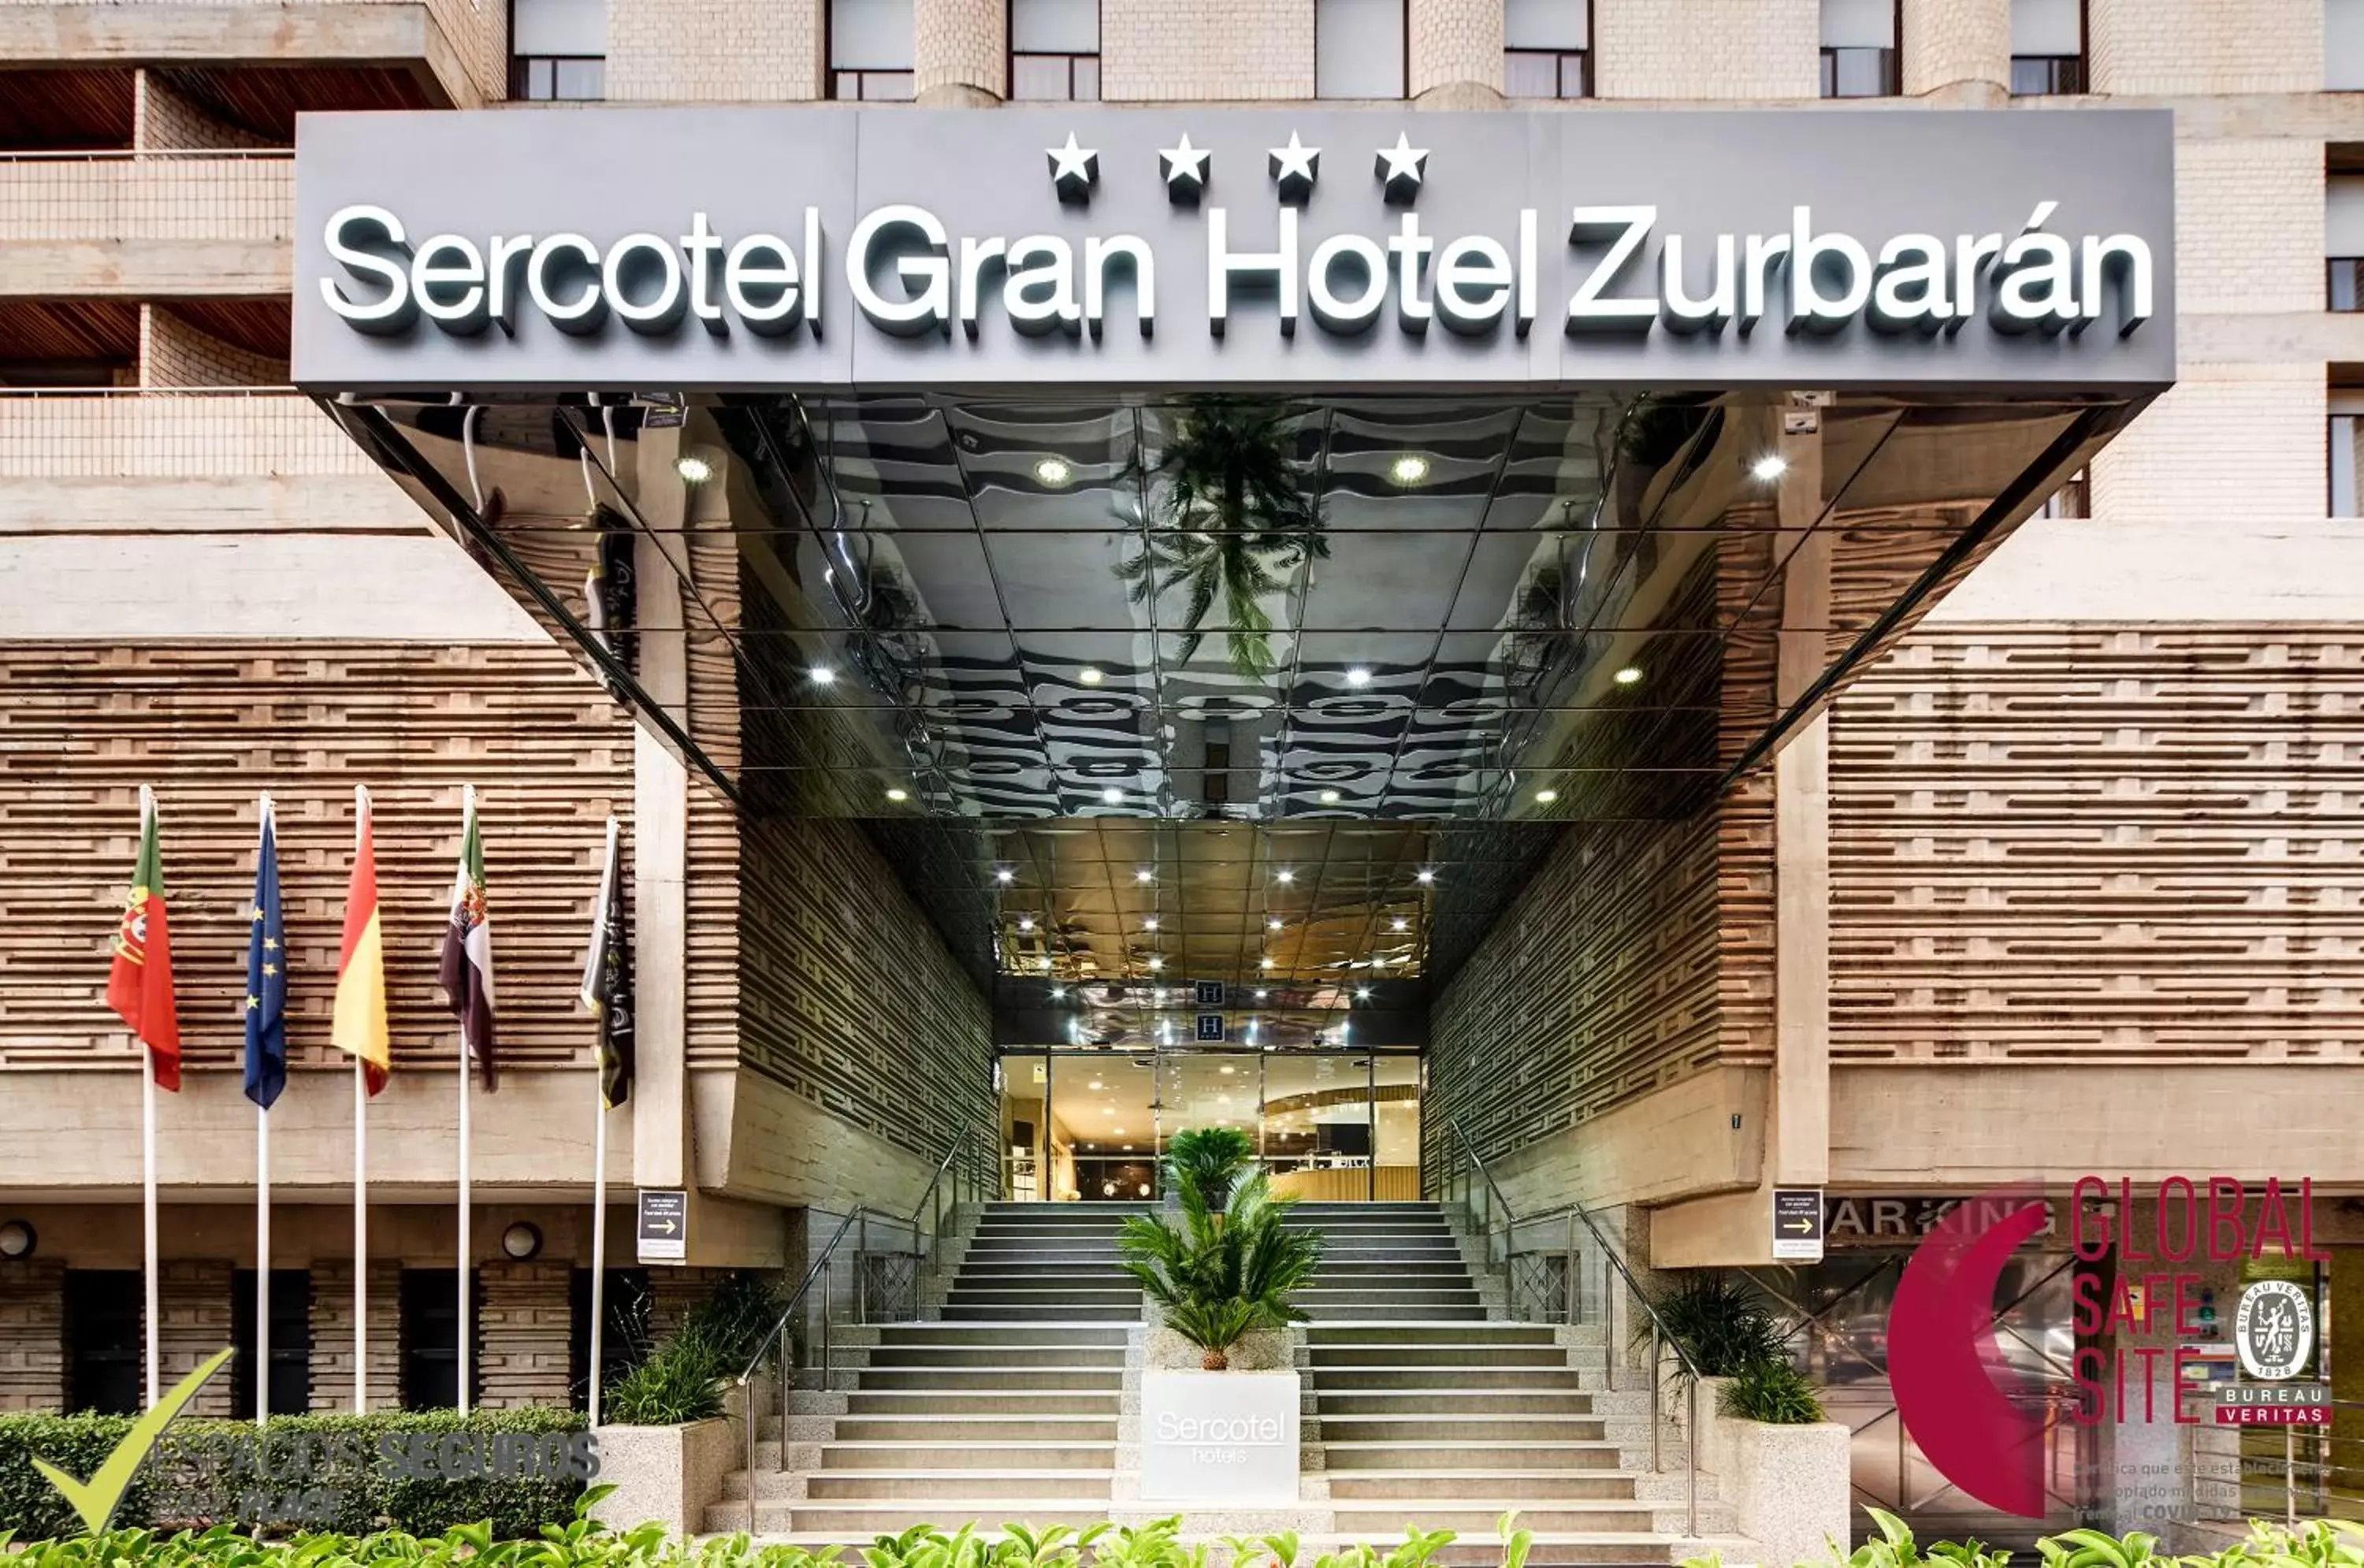 Facade/entrance in Sercotel Gran Hotel Zurbarán